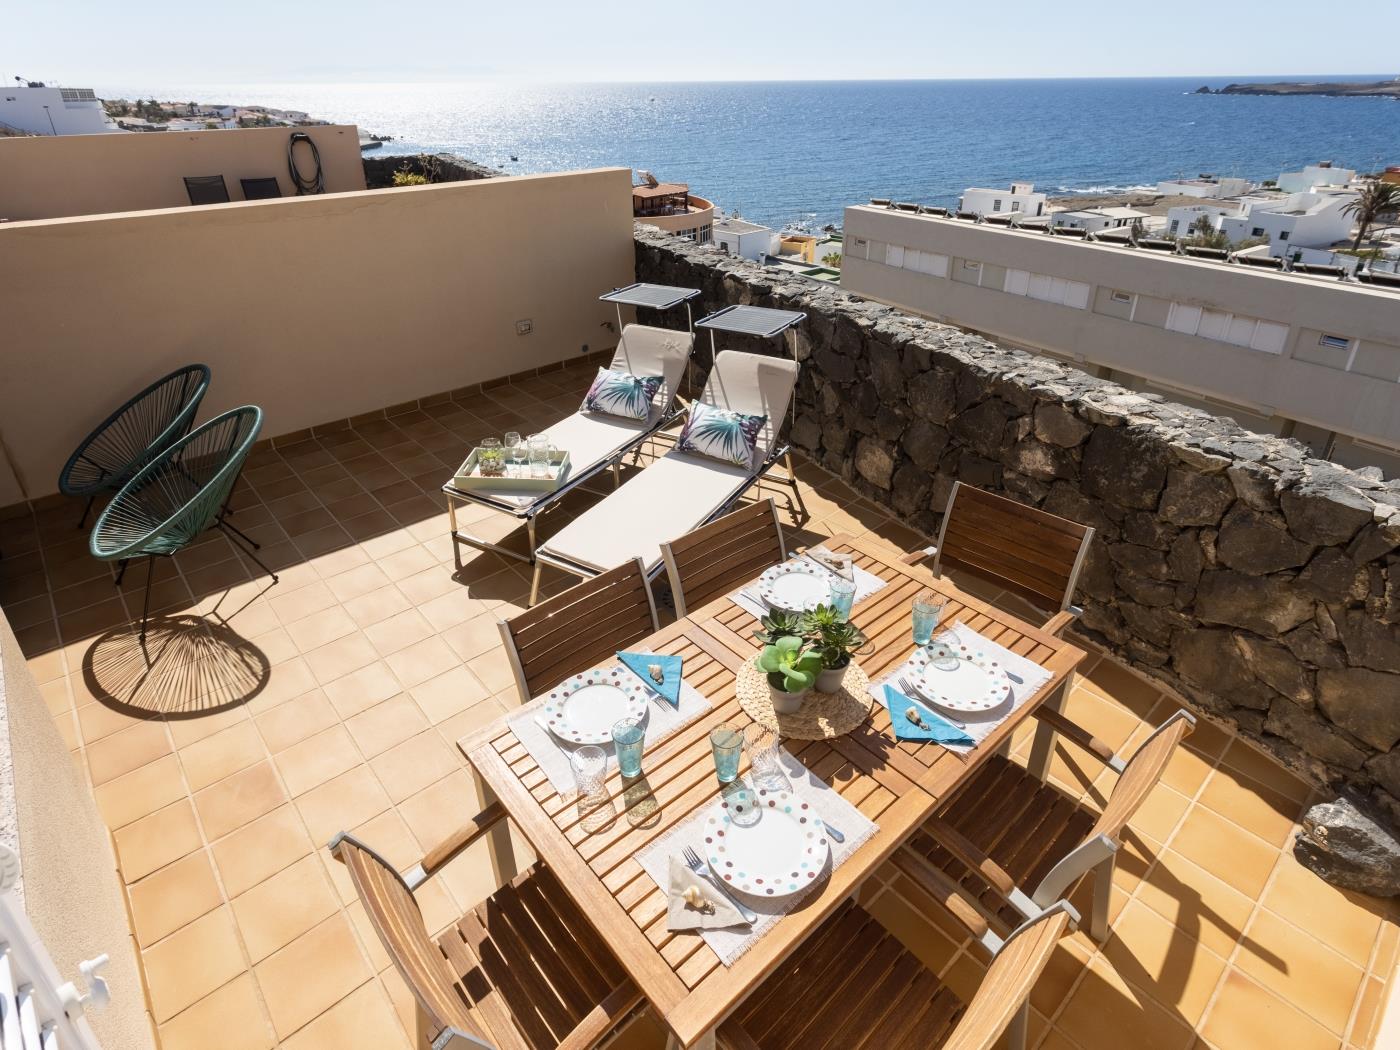 Sea Breeze Apartment in Tenerife - PORÍS 5 in Porís de Abona